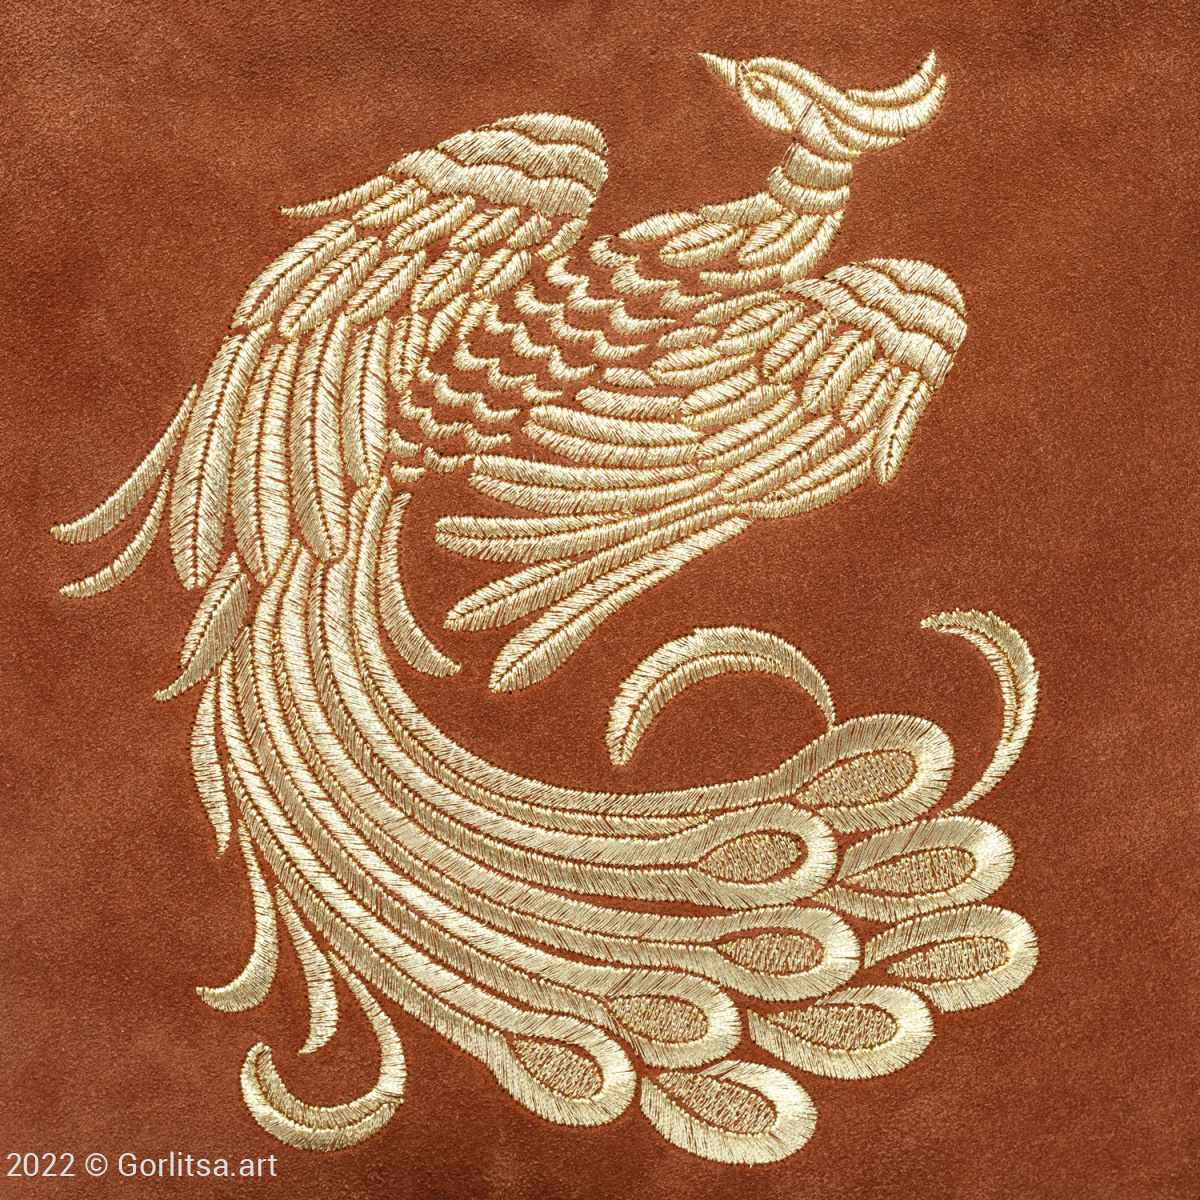 Сумка кожаная «Жар-птица» 1192/62026-28, коричневый / золото нат. кожа Горлица-арт фото 3